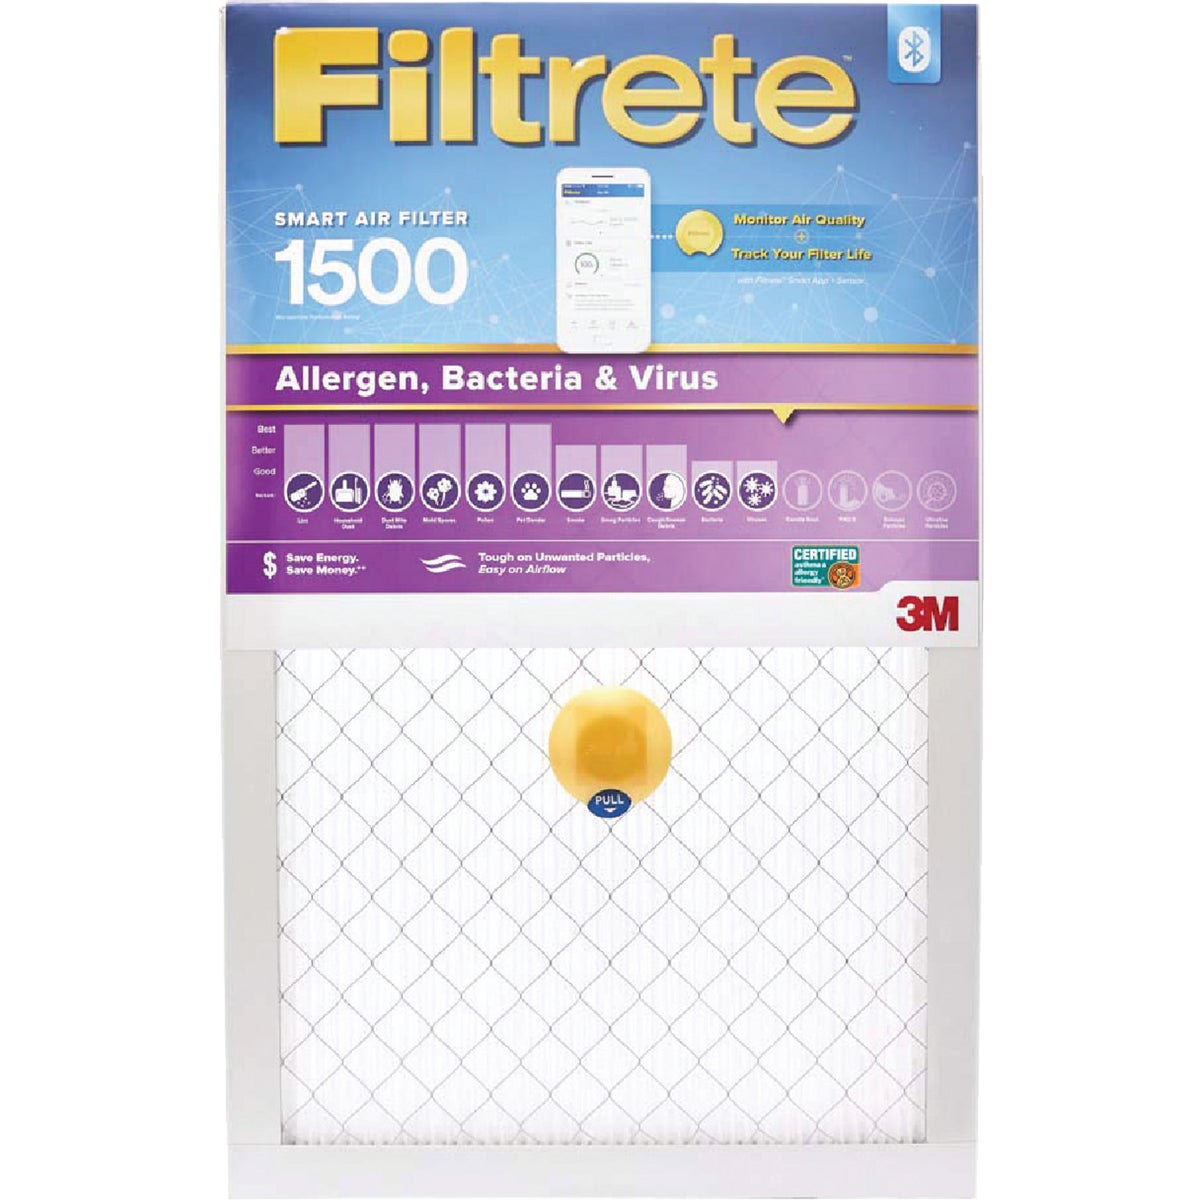 Filtrete 16 In. x 20 In. x 1 In. 1500 MPR Allergen, Bacteria & Virus Smart Furnace Filter